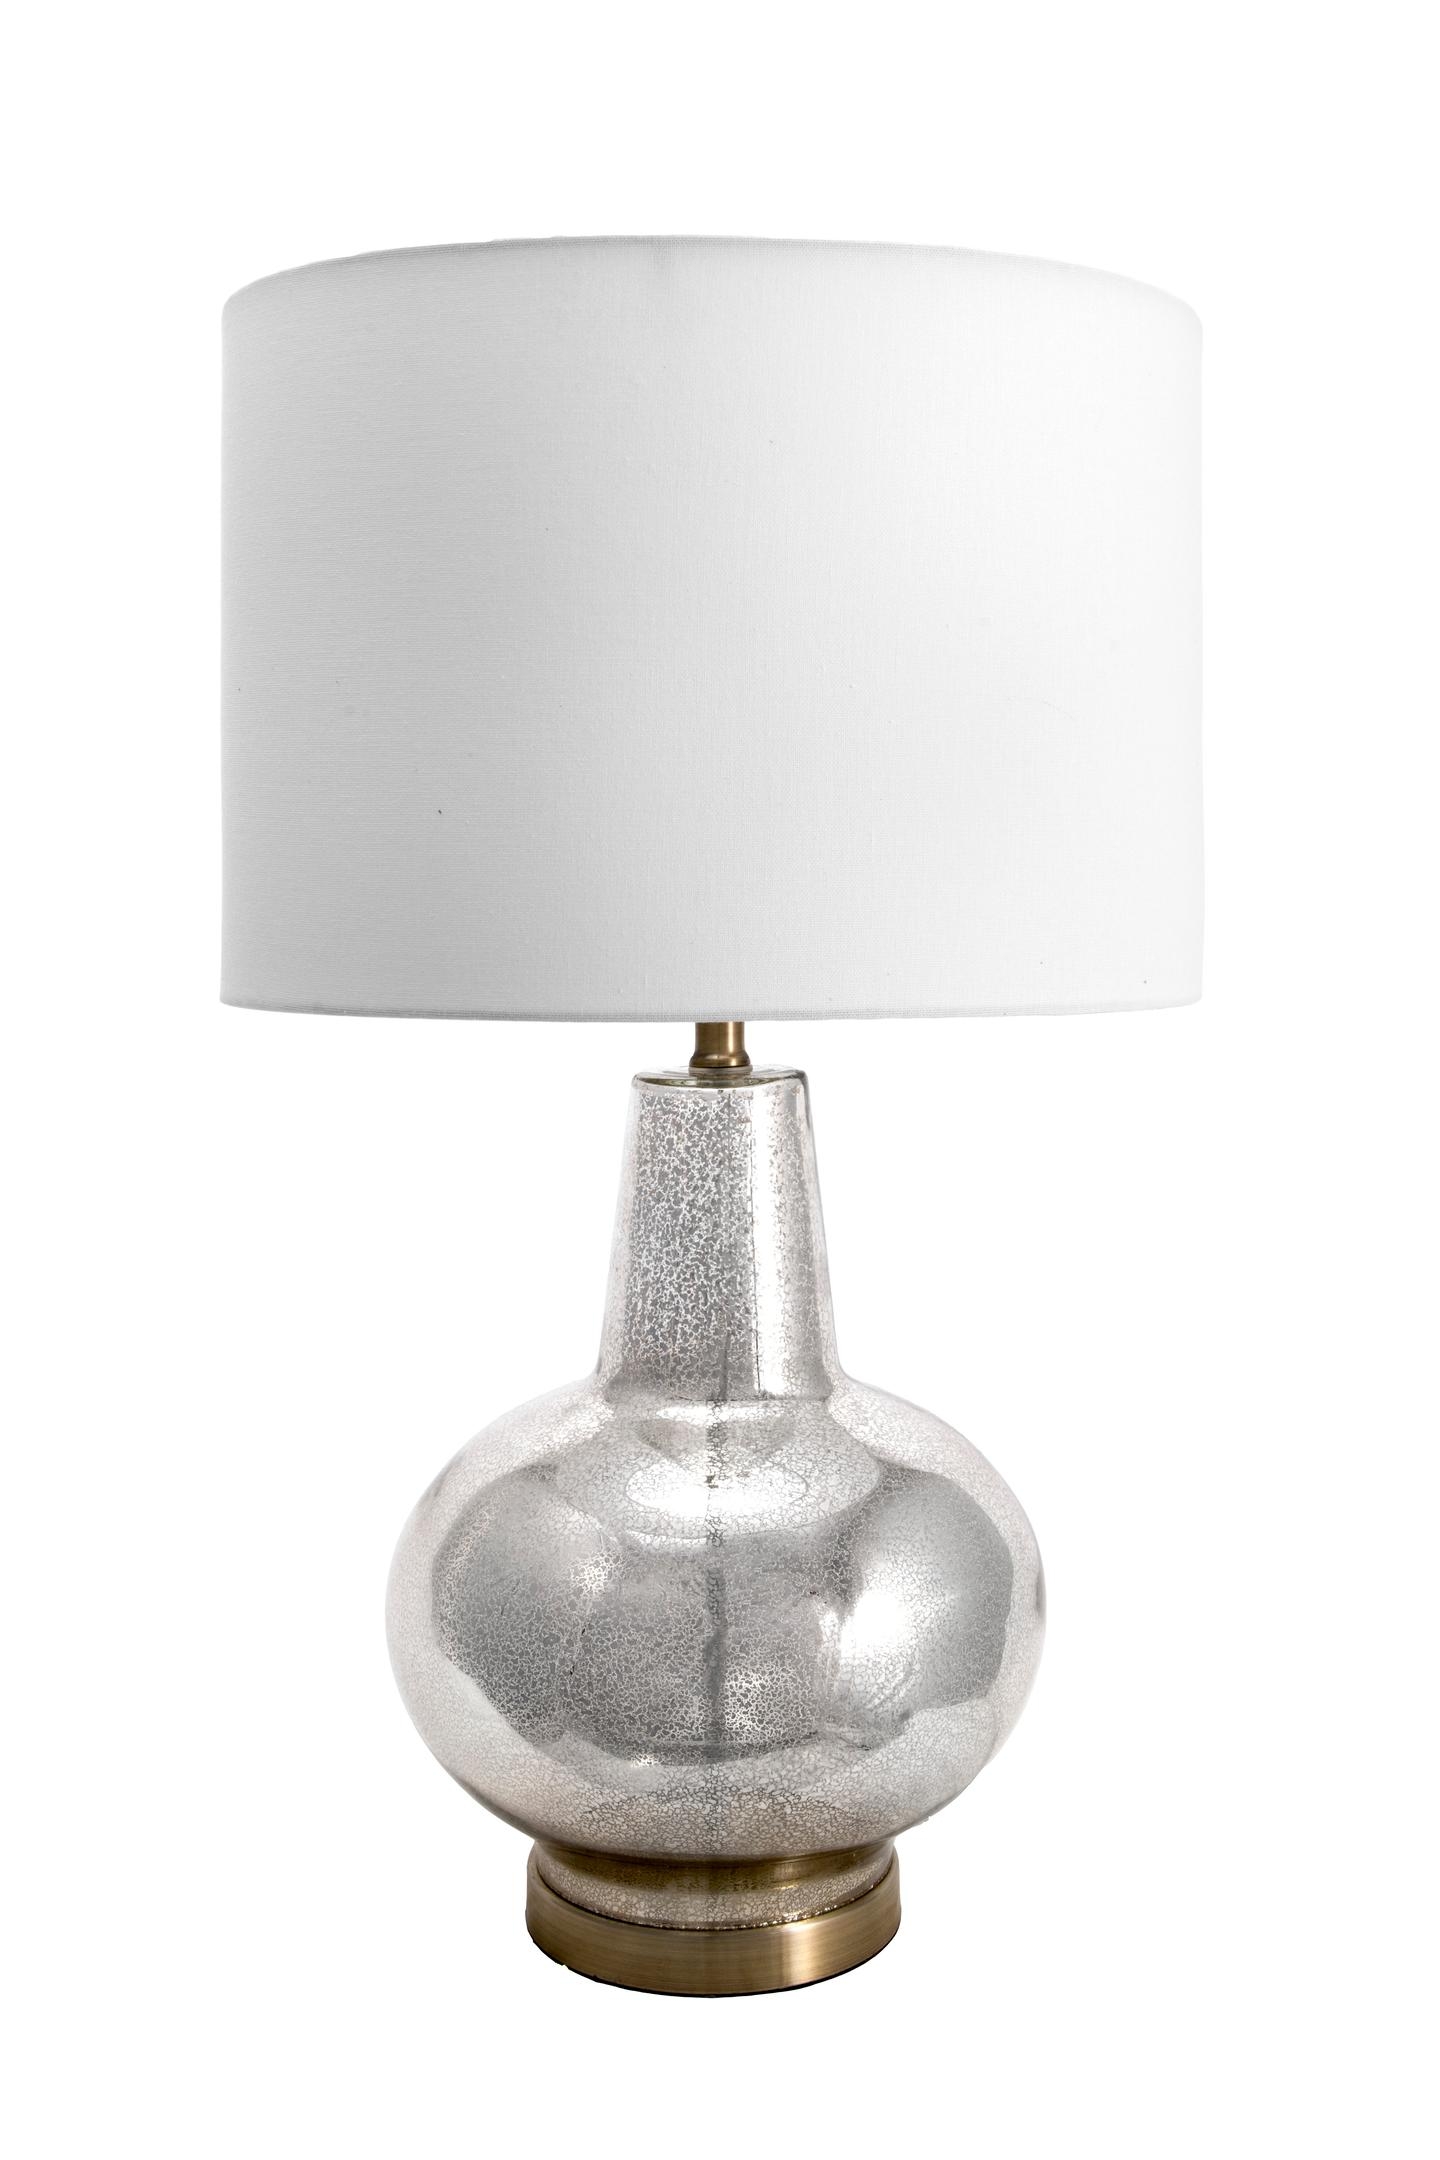 Tustin 28" Glass Table Lamp - Image 2